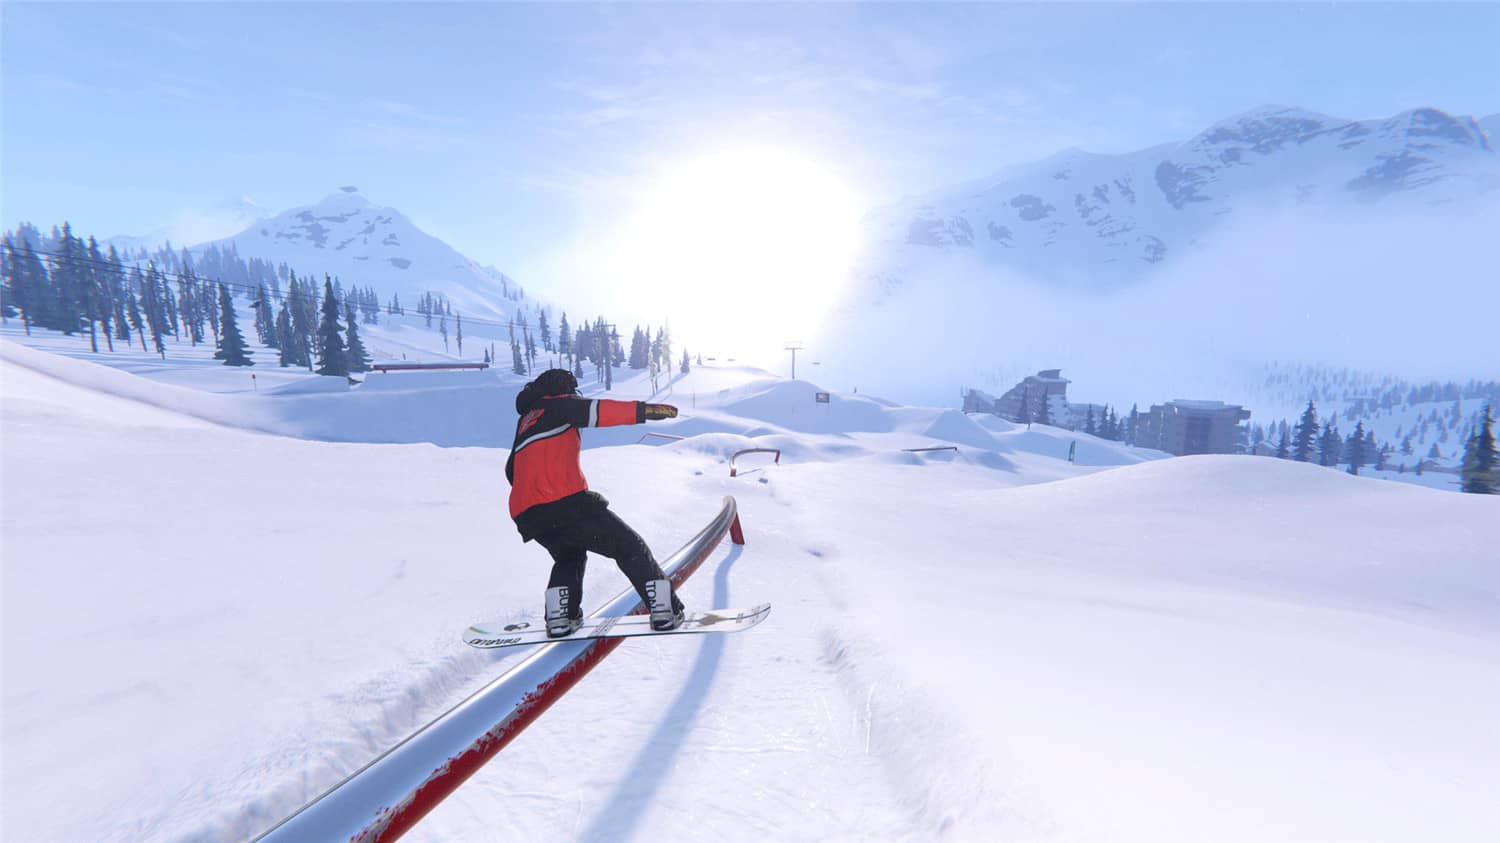 Shredders/单板滑雪游戏插图7